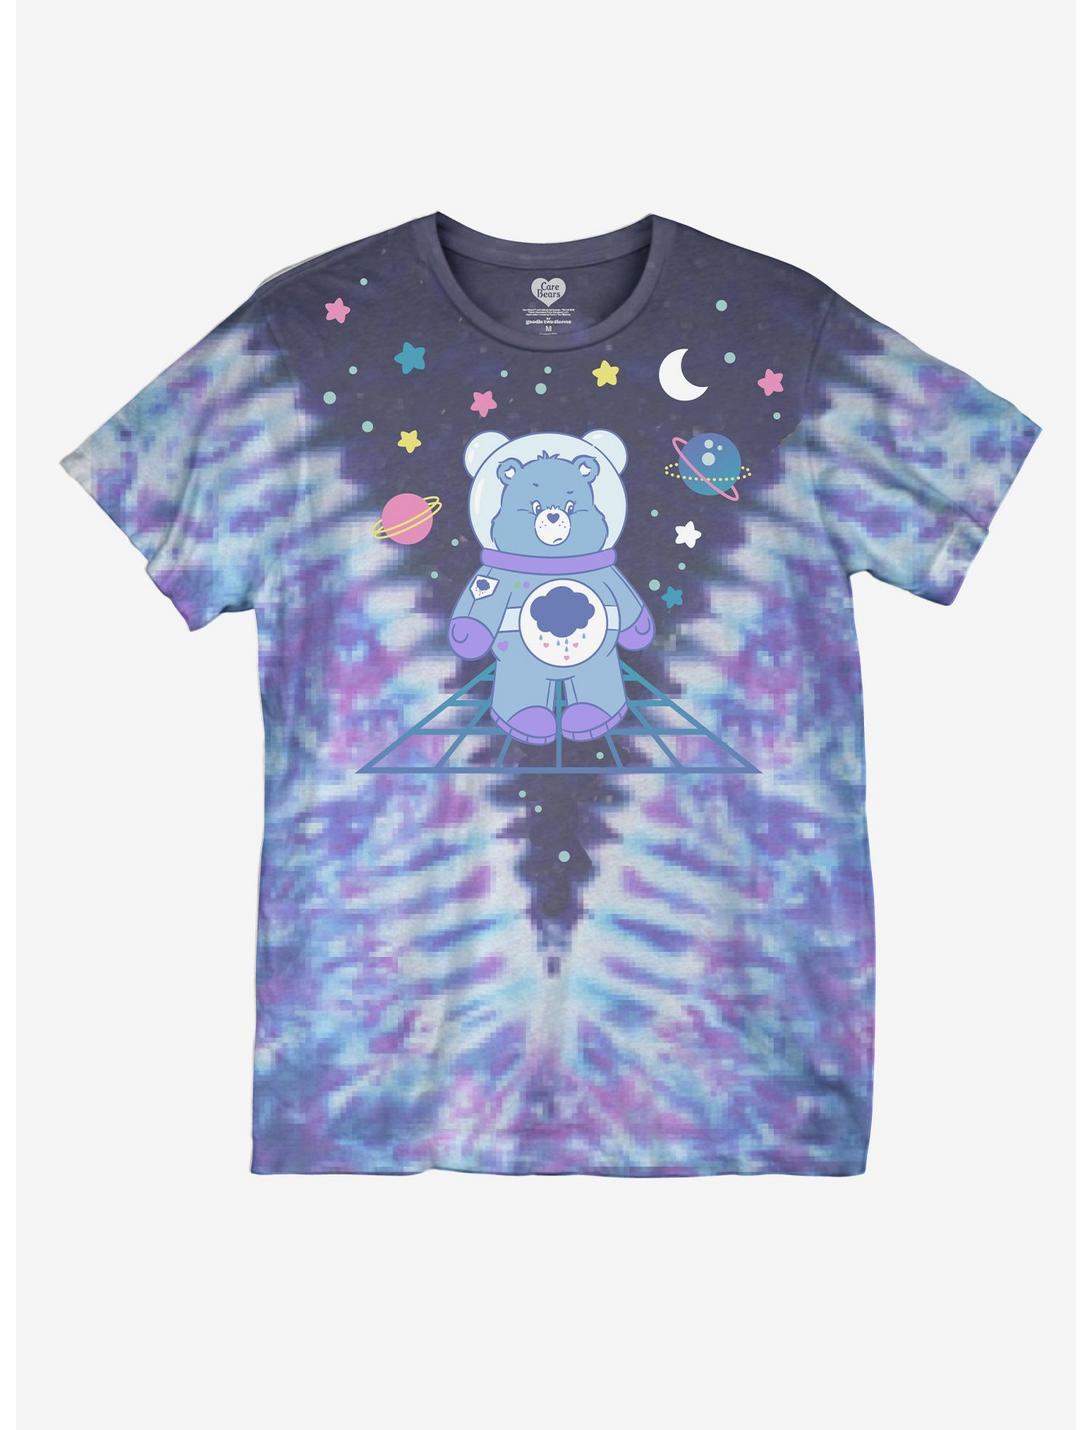 Care Bears Space Tie-Dye Boyfriend Fit Girls T-Shirt Plus Size, MULTI, hi-res